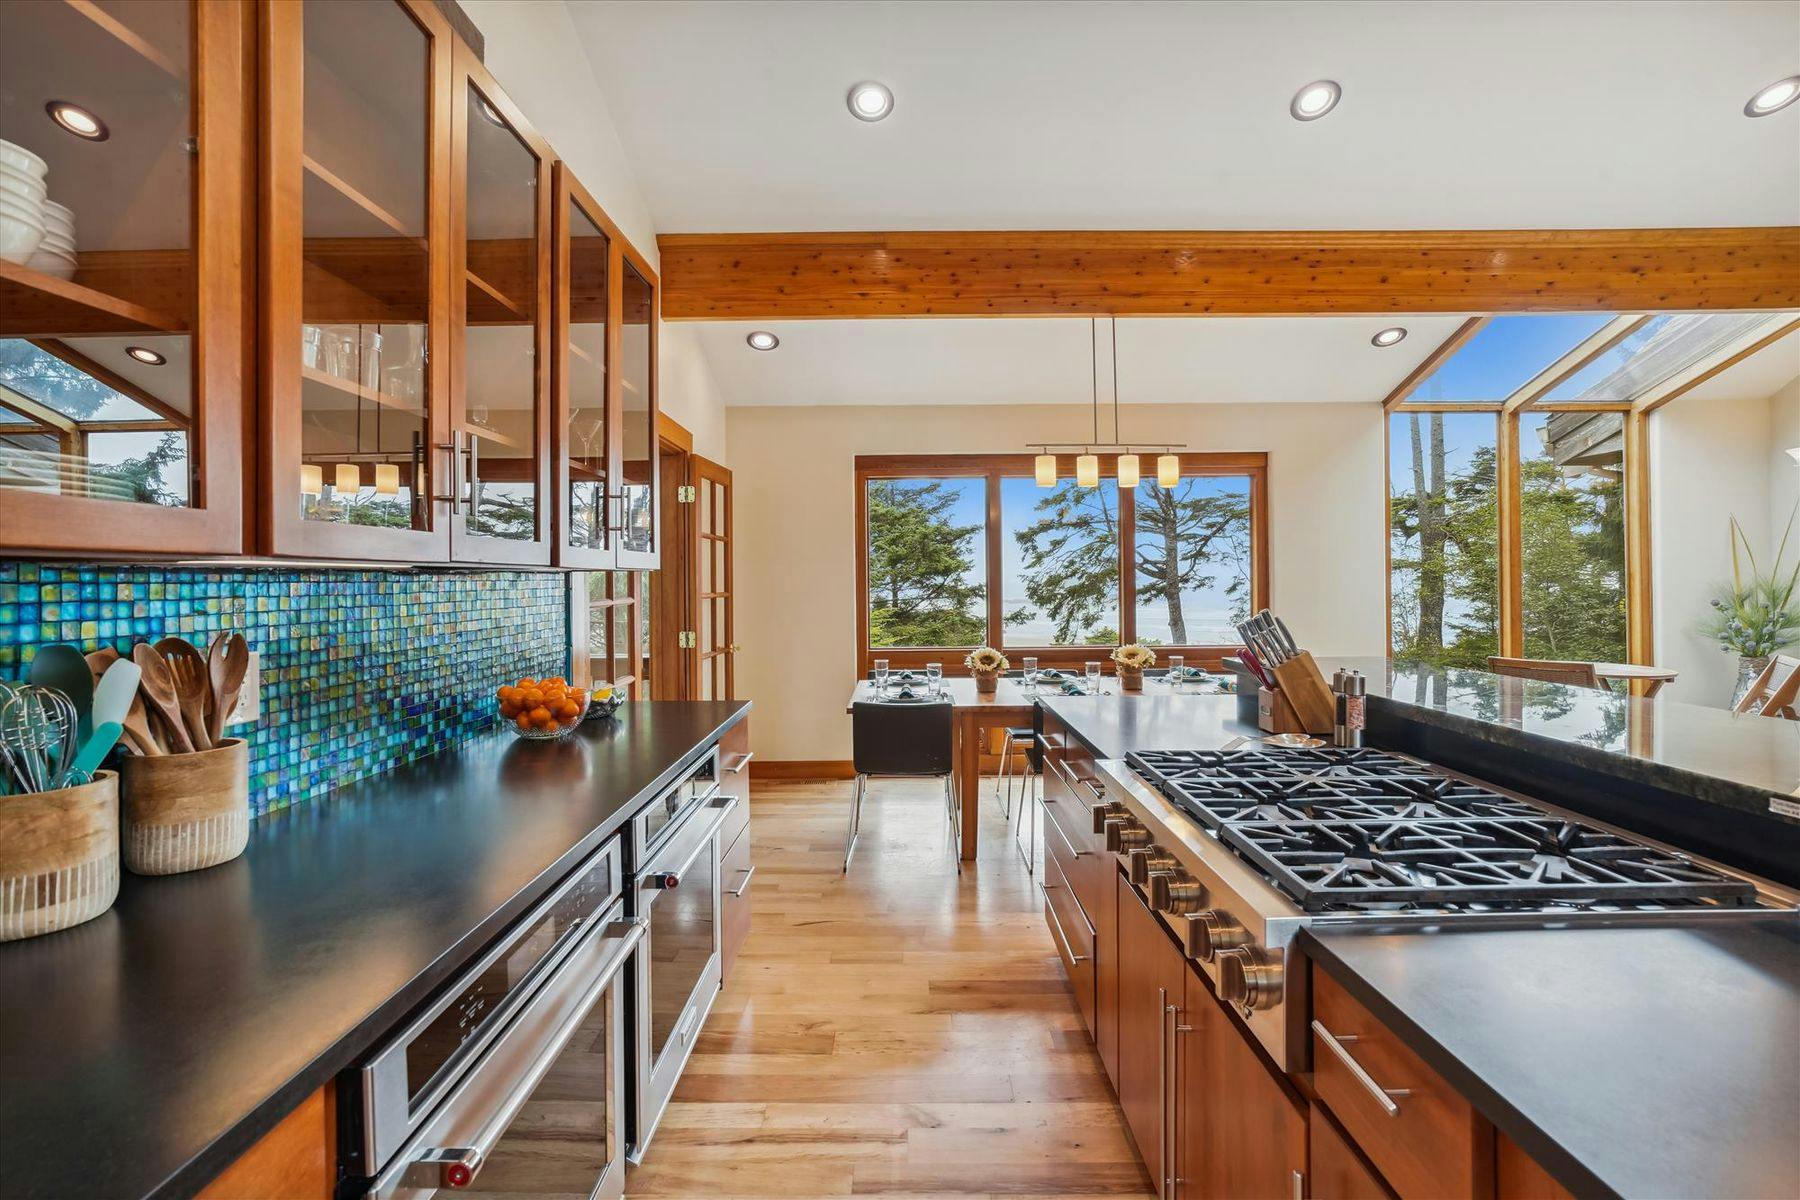 Modern kitchen at Oregon Coast vacation rental home